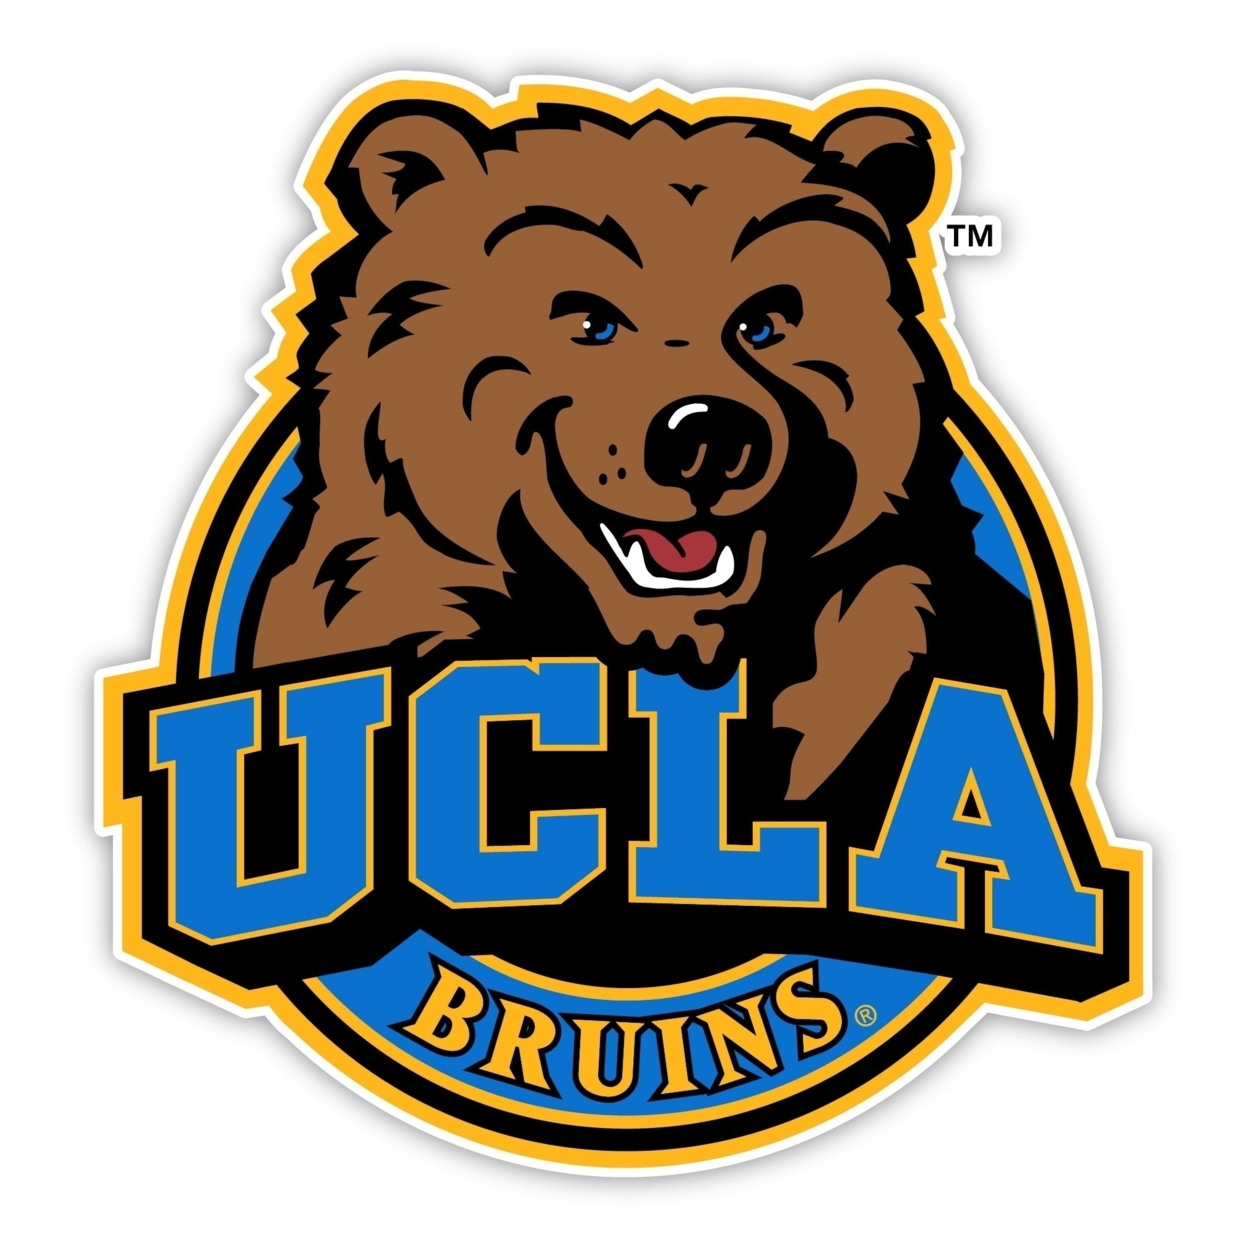 UCLA Bruins 2 Inch Vinyl Mascot Decal Sticker - 1, 4-Inch